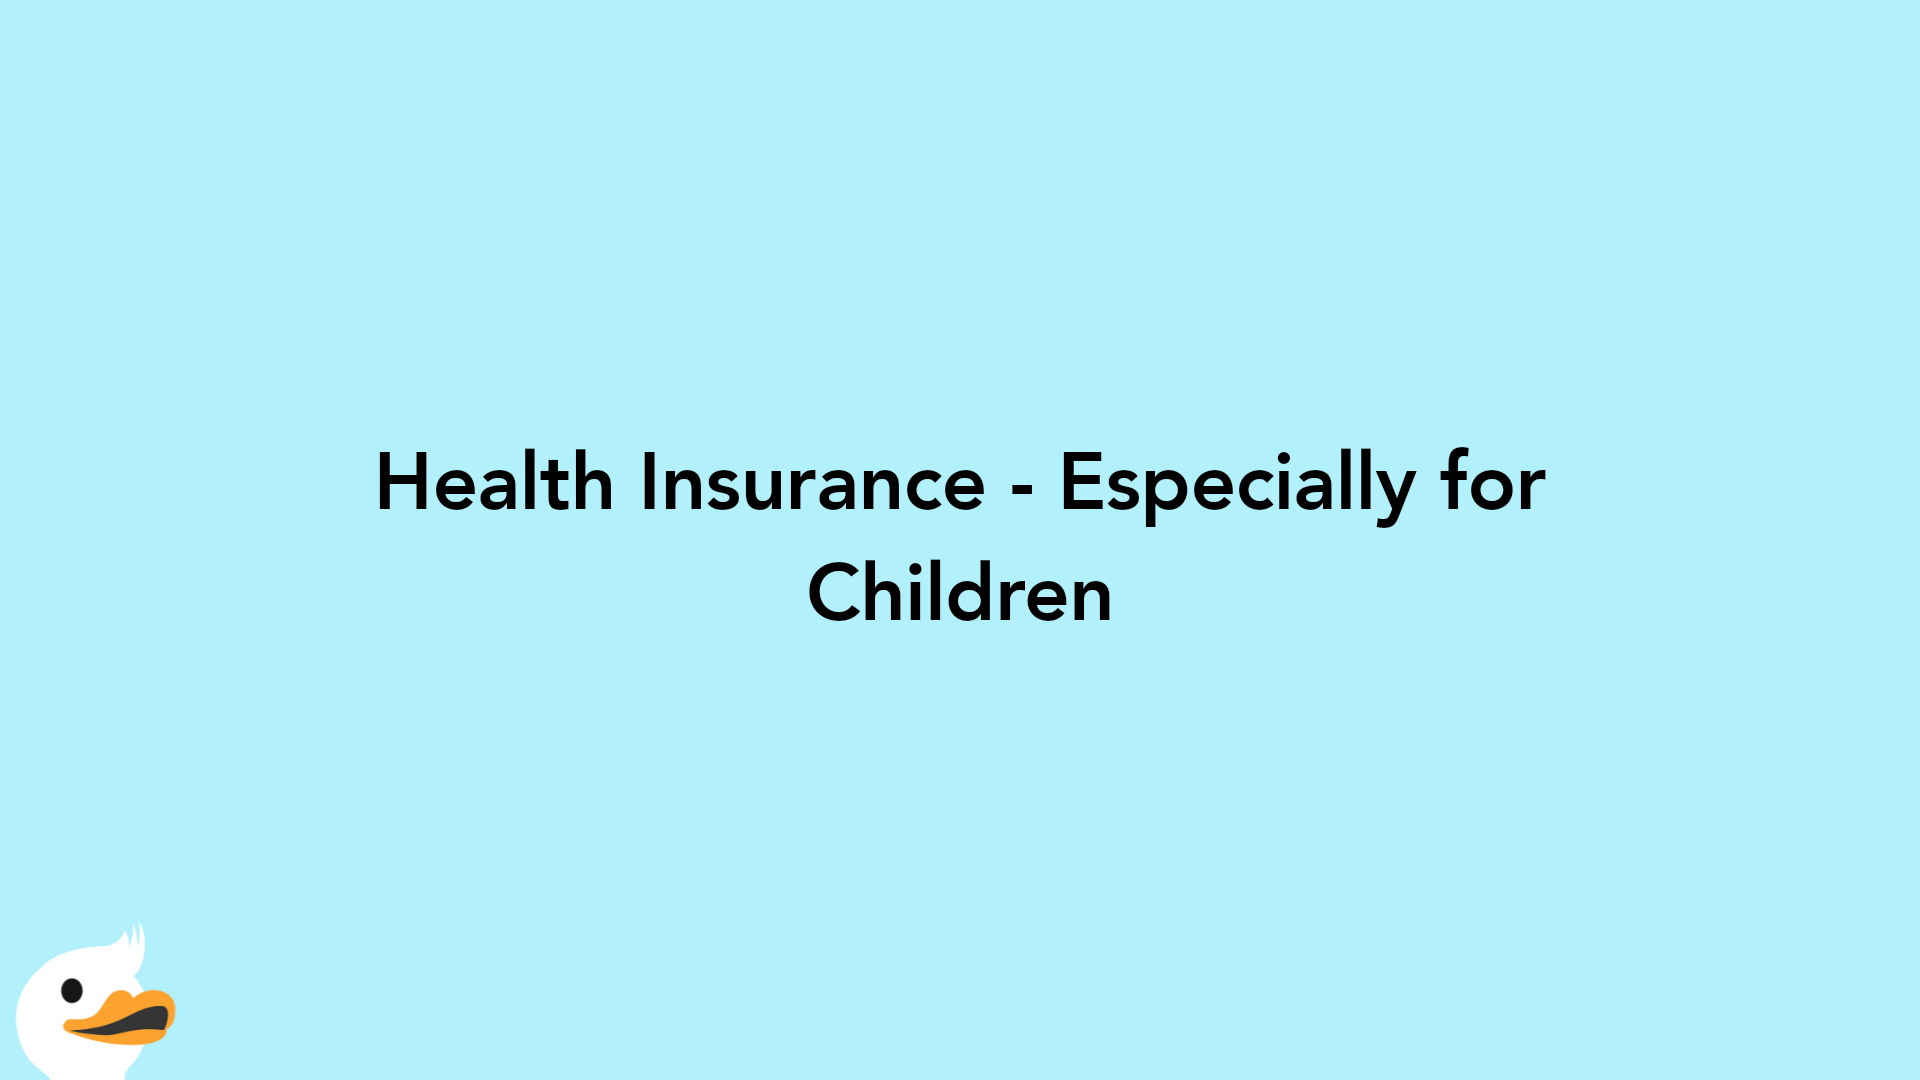 Health Insurance - Especially for Children